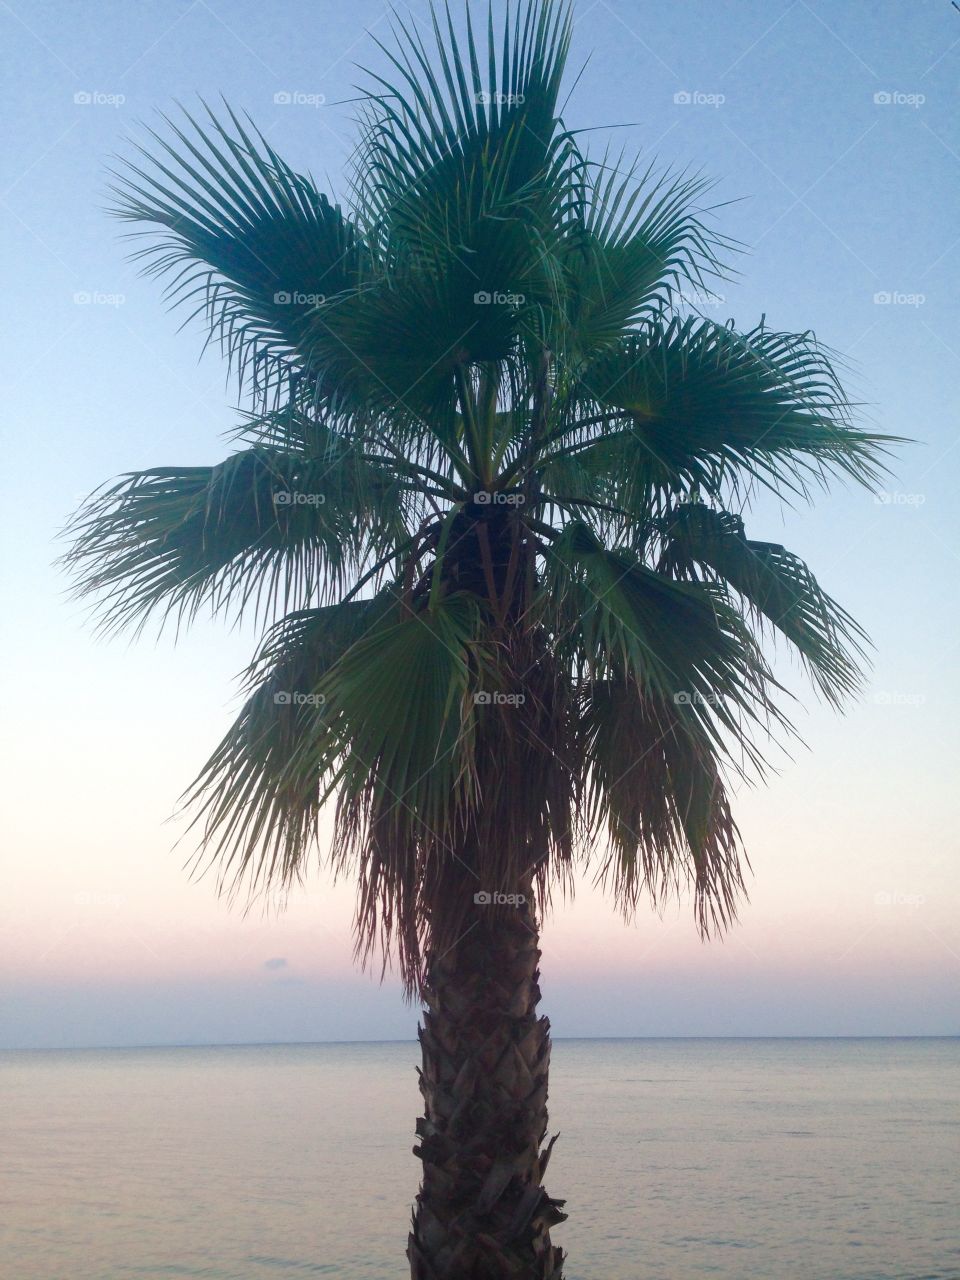 Kefalonian palm. Kelfalonian palm tree at sunset 